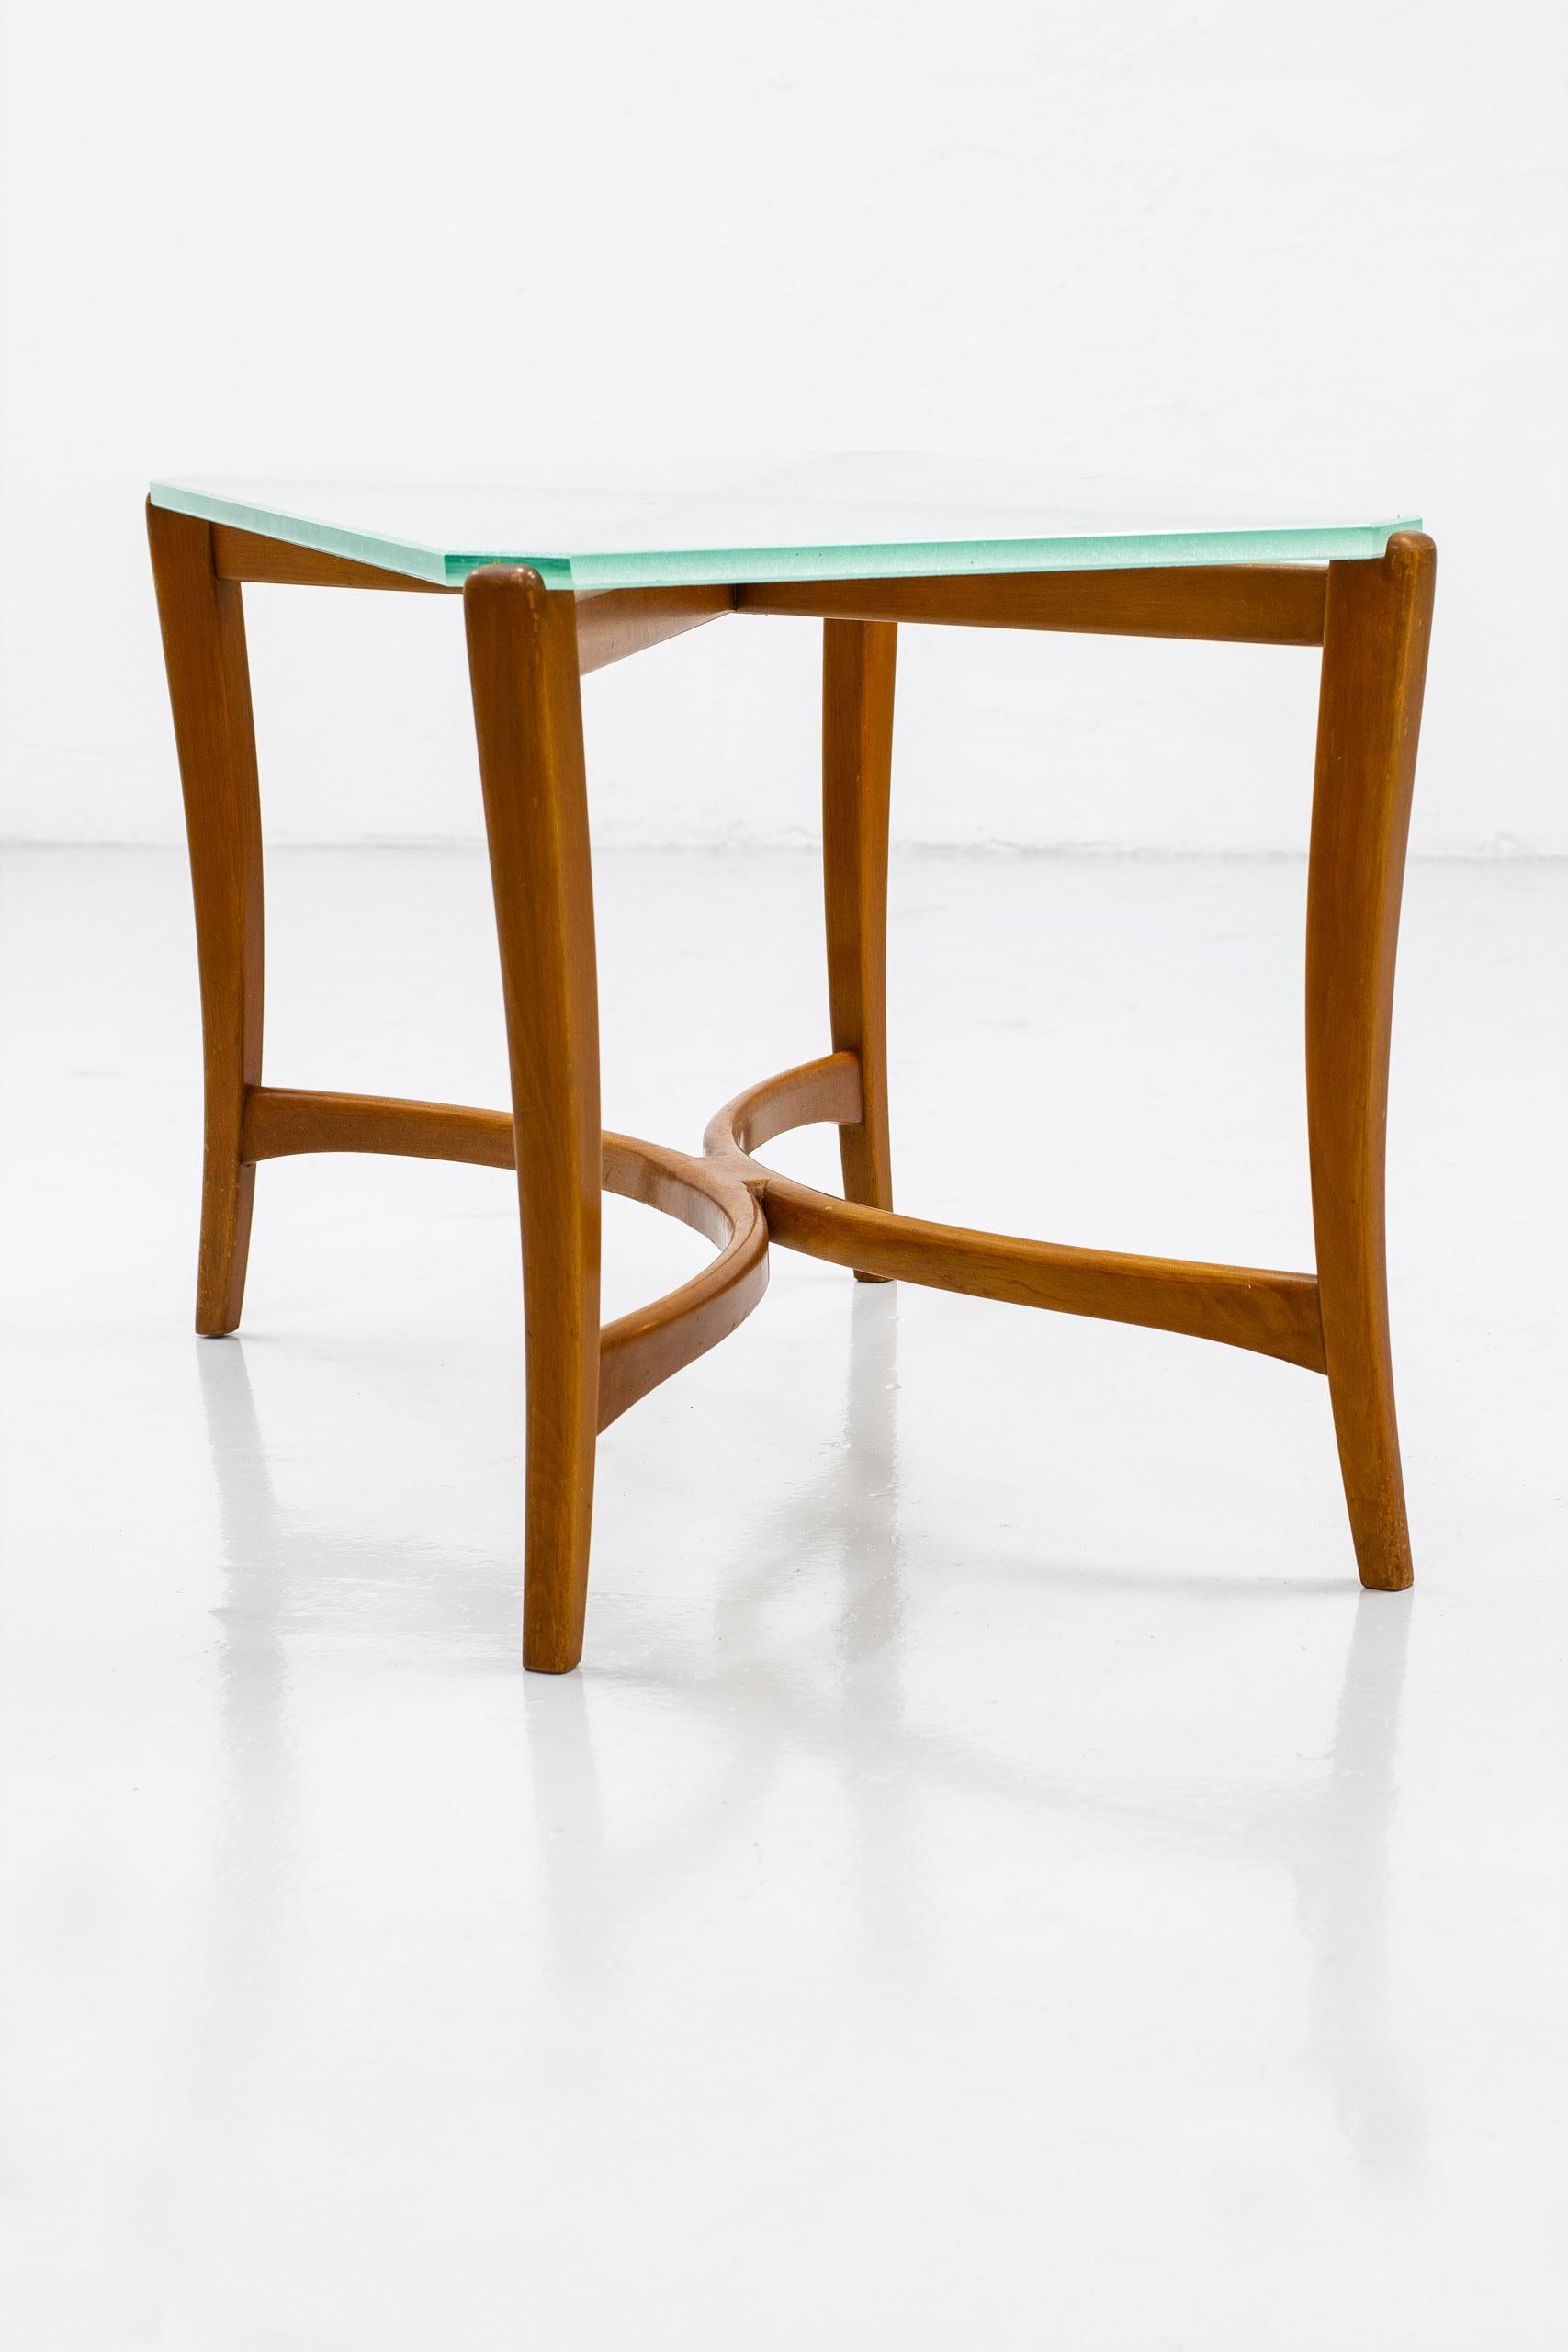 Mid-20th Century Swedish Modern Wood and Glass Sofa Table by Nordiska Kompaniet, Sweden, 1939 For Sale